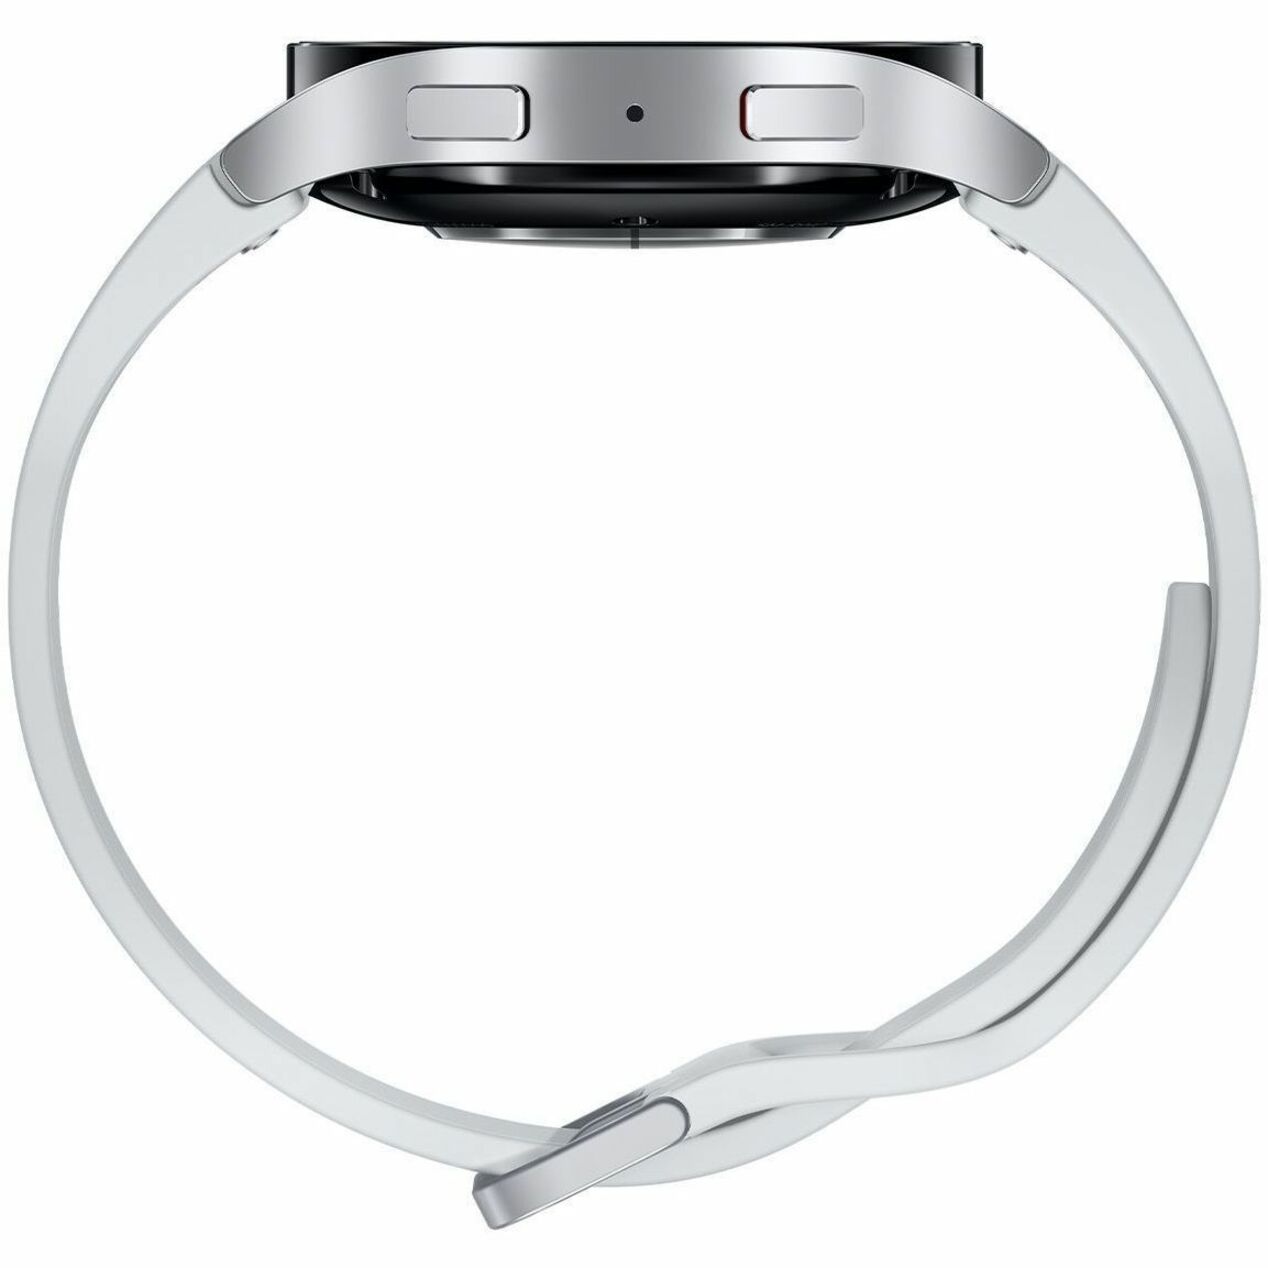 Samsung SM-R940NZSAXAA Galaxy Watch6 (Bluetooth, 44mm), Silver Smart Watch